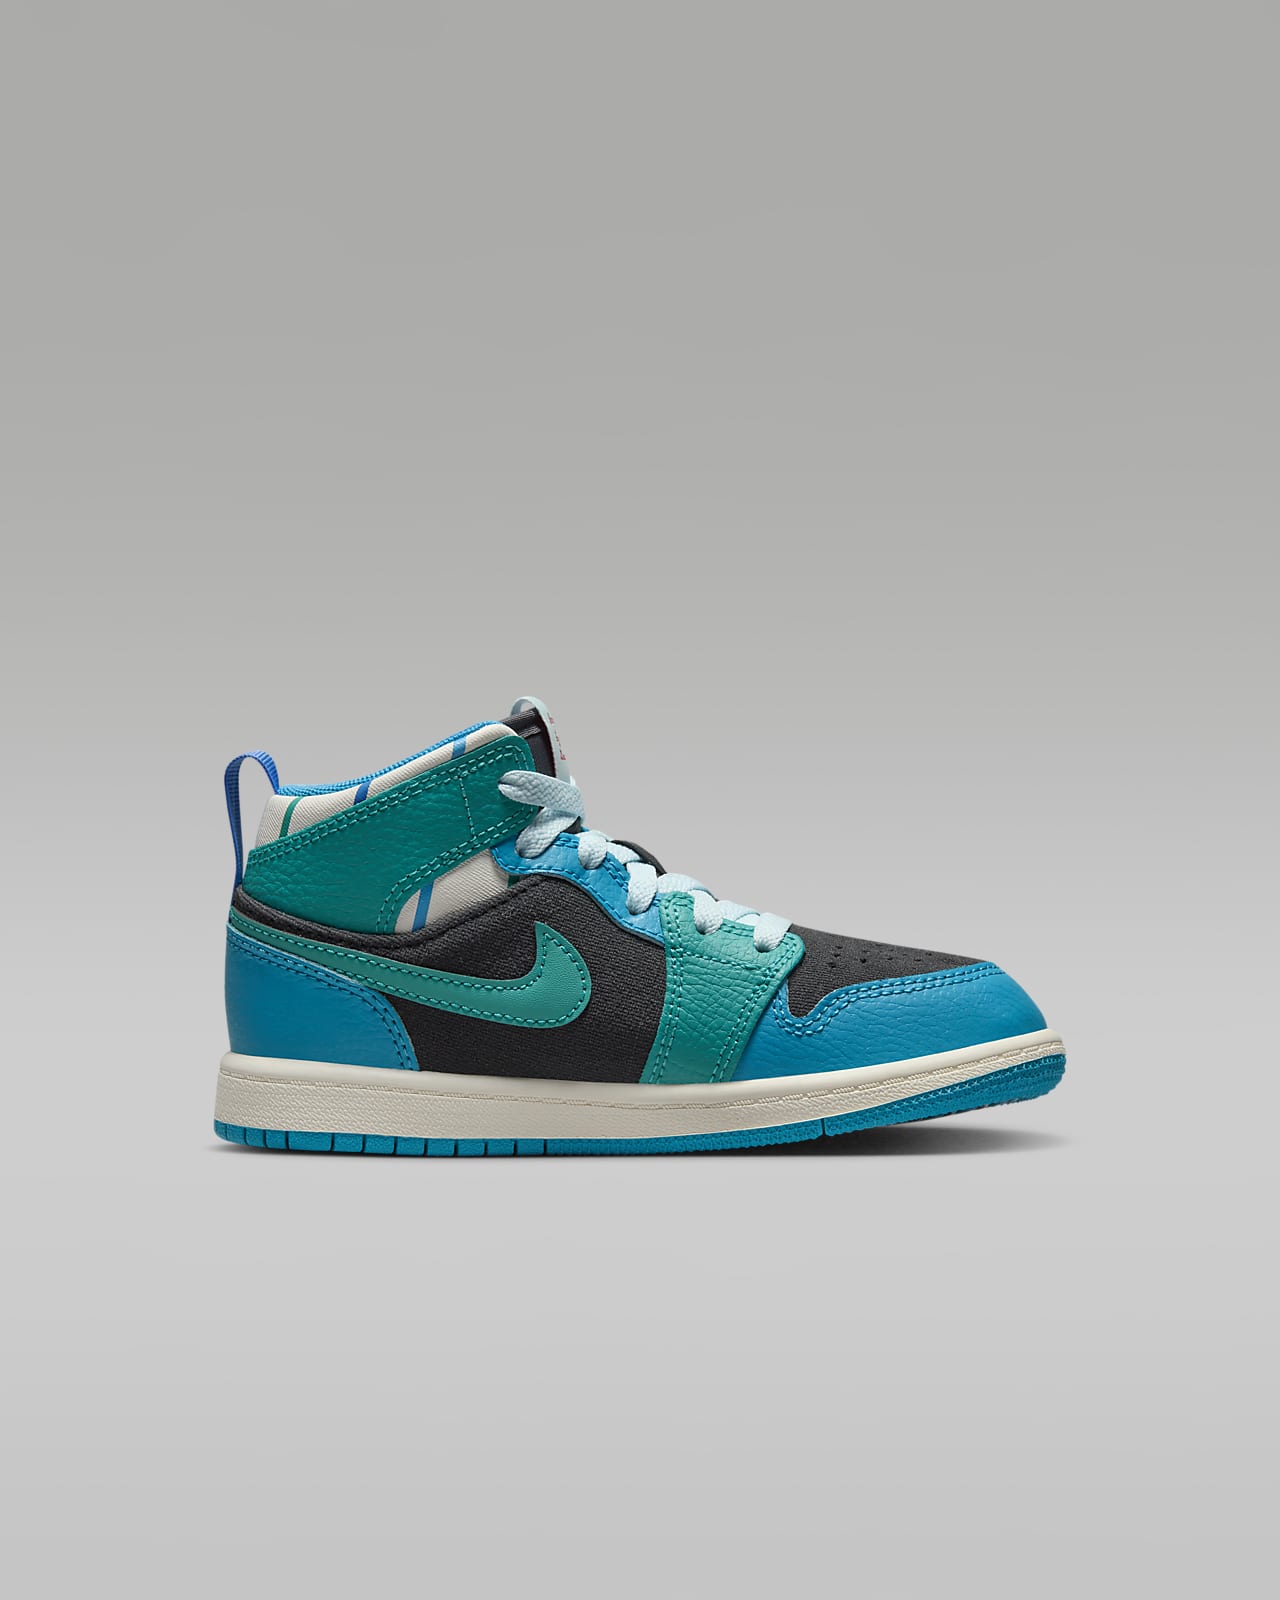 Jordan 1 Retro leather sneakers in multicoloured - Nike Kids